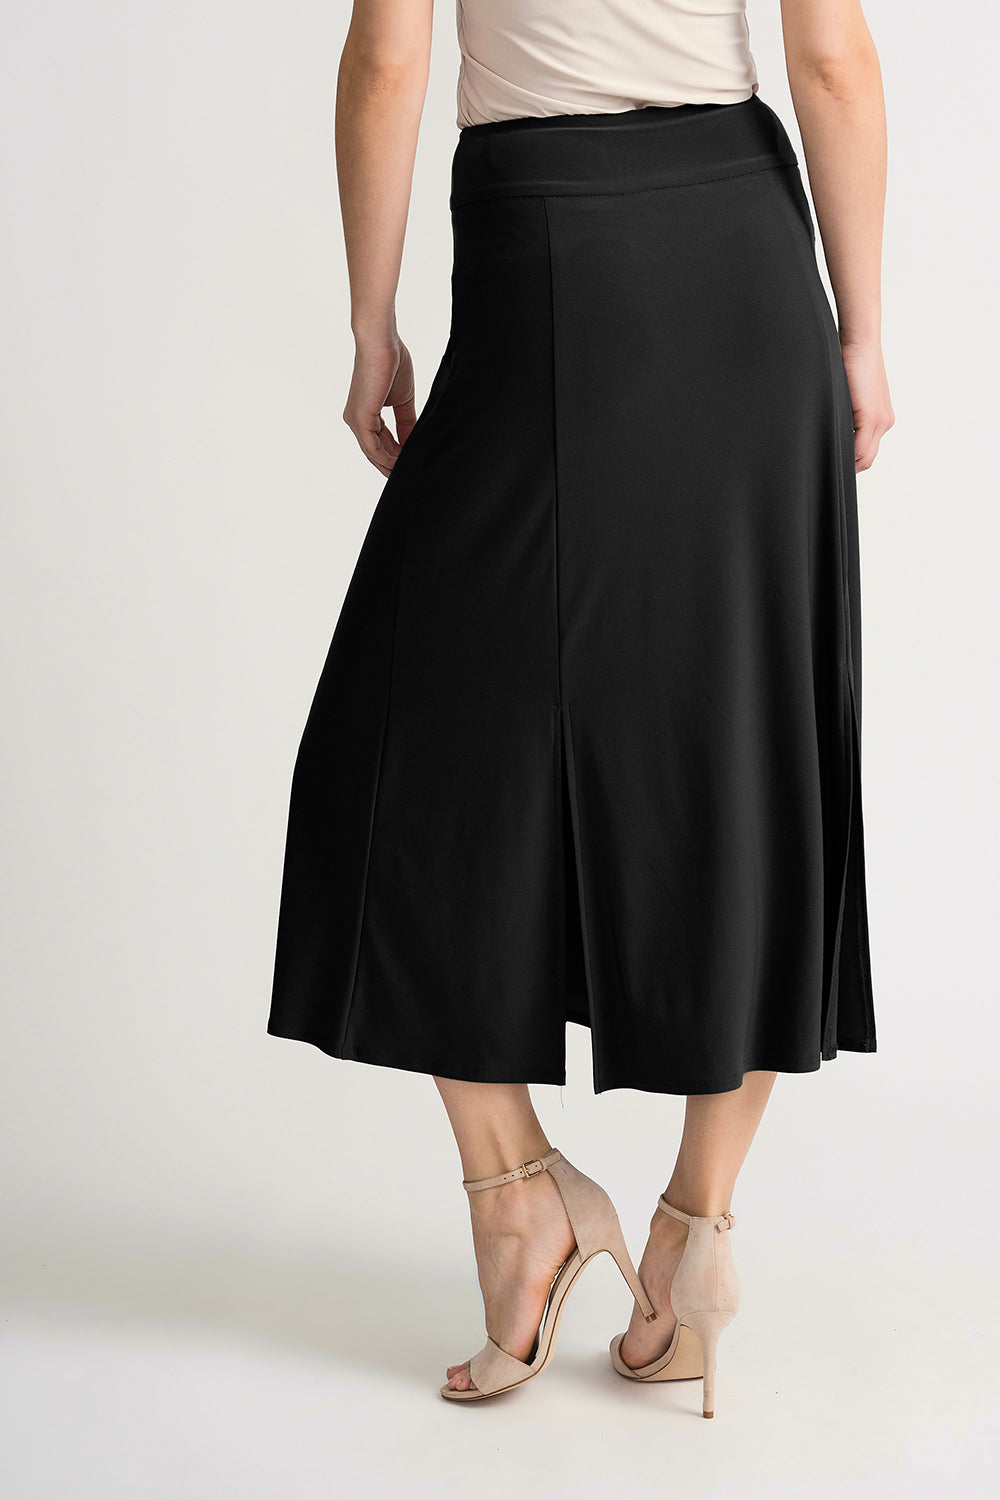 Joseph Ribkoff Black Skirt Style 202157